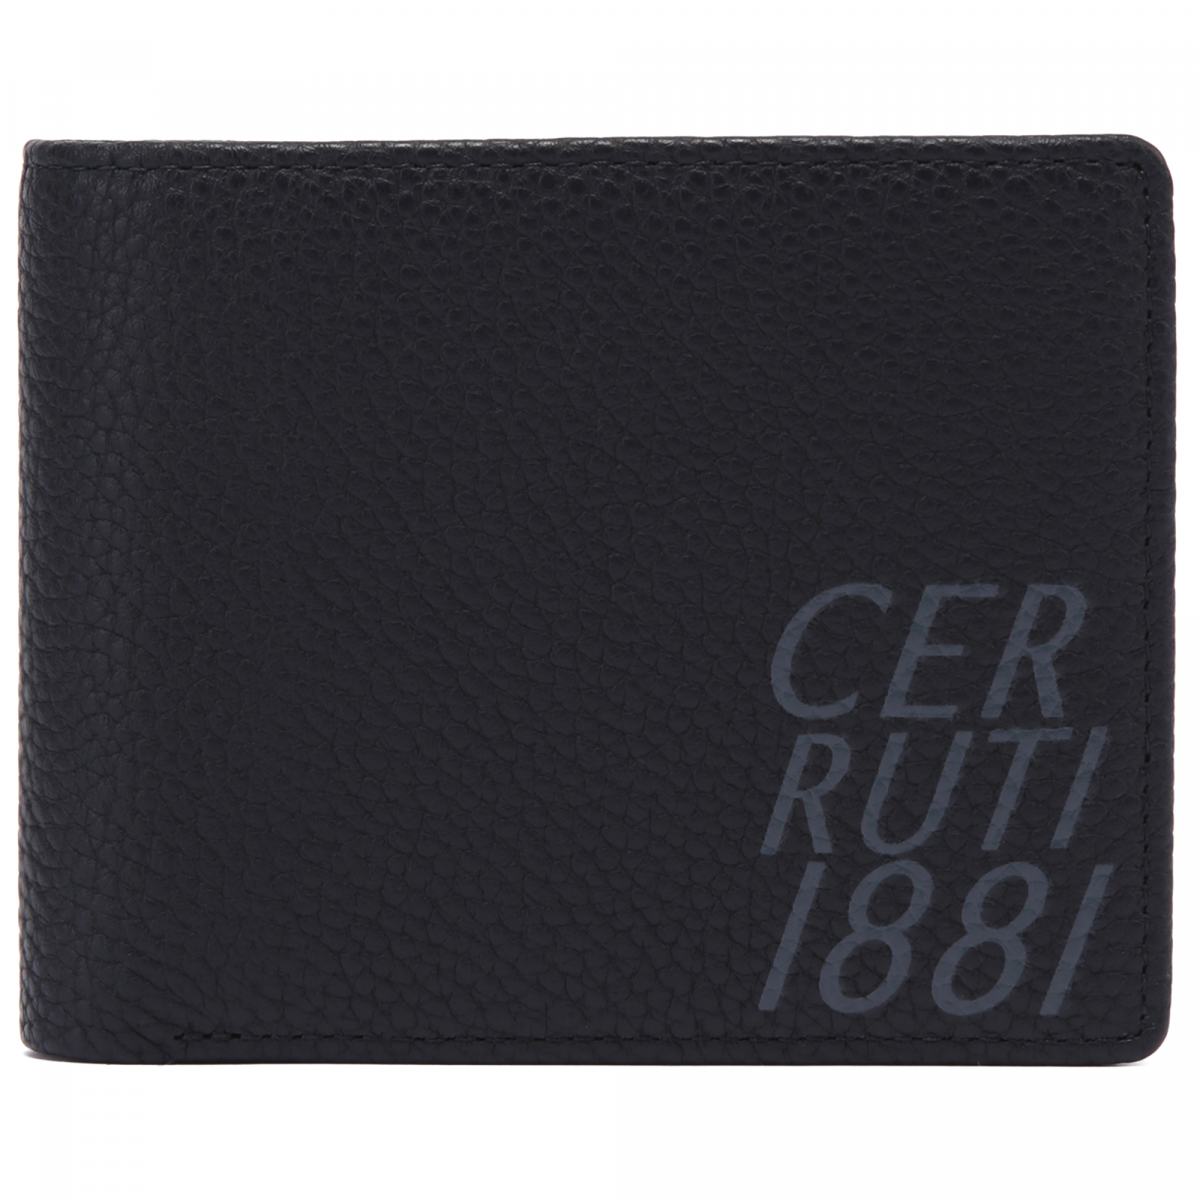 Бумажник Cerruti 1881